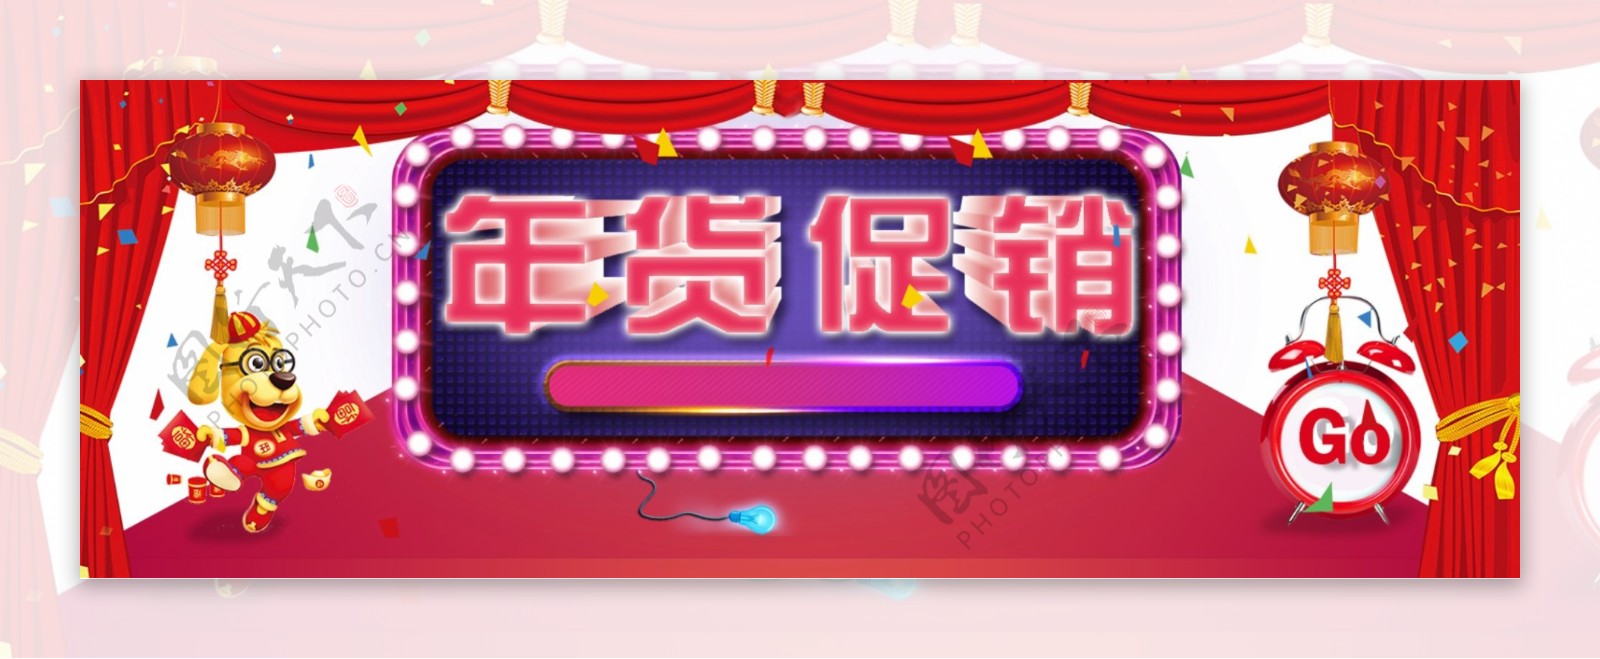 电商淘宝年货节促销活动banner